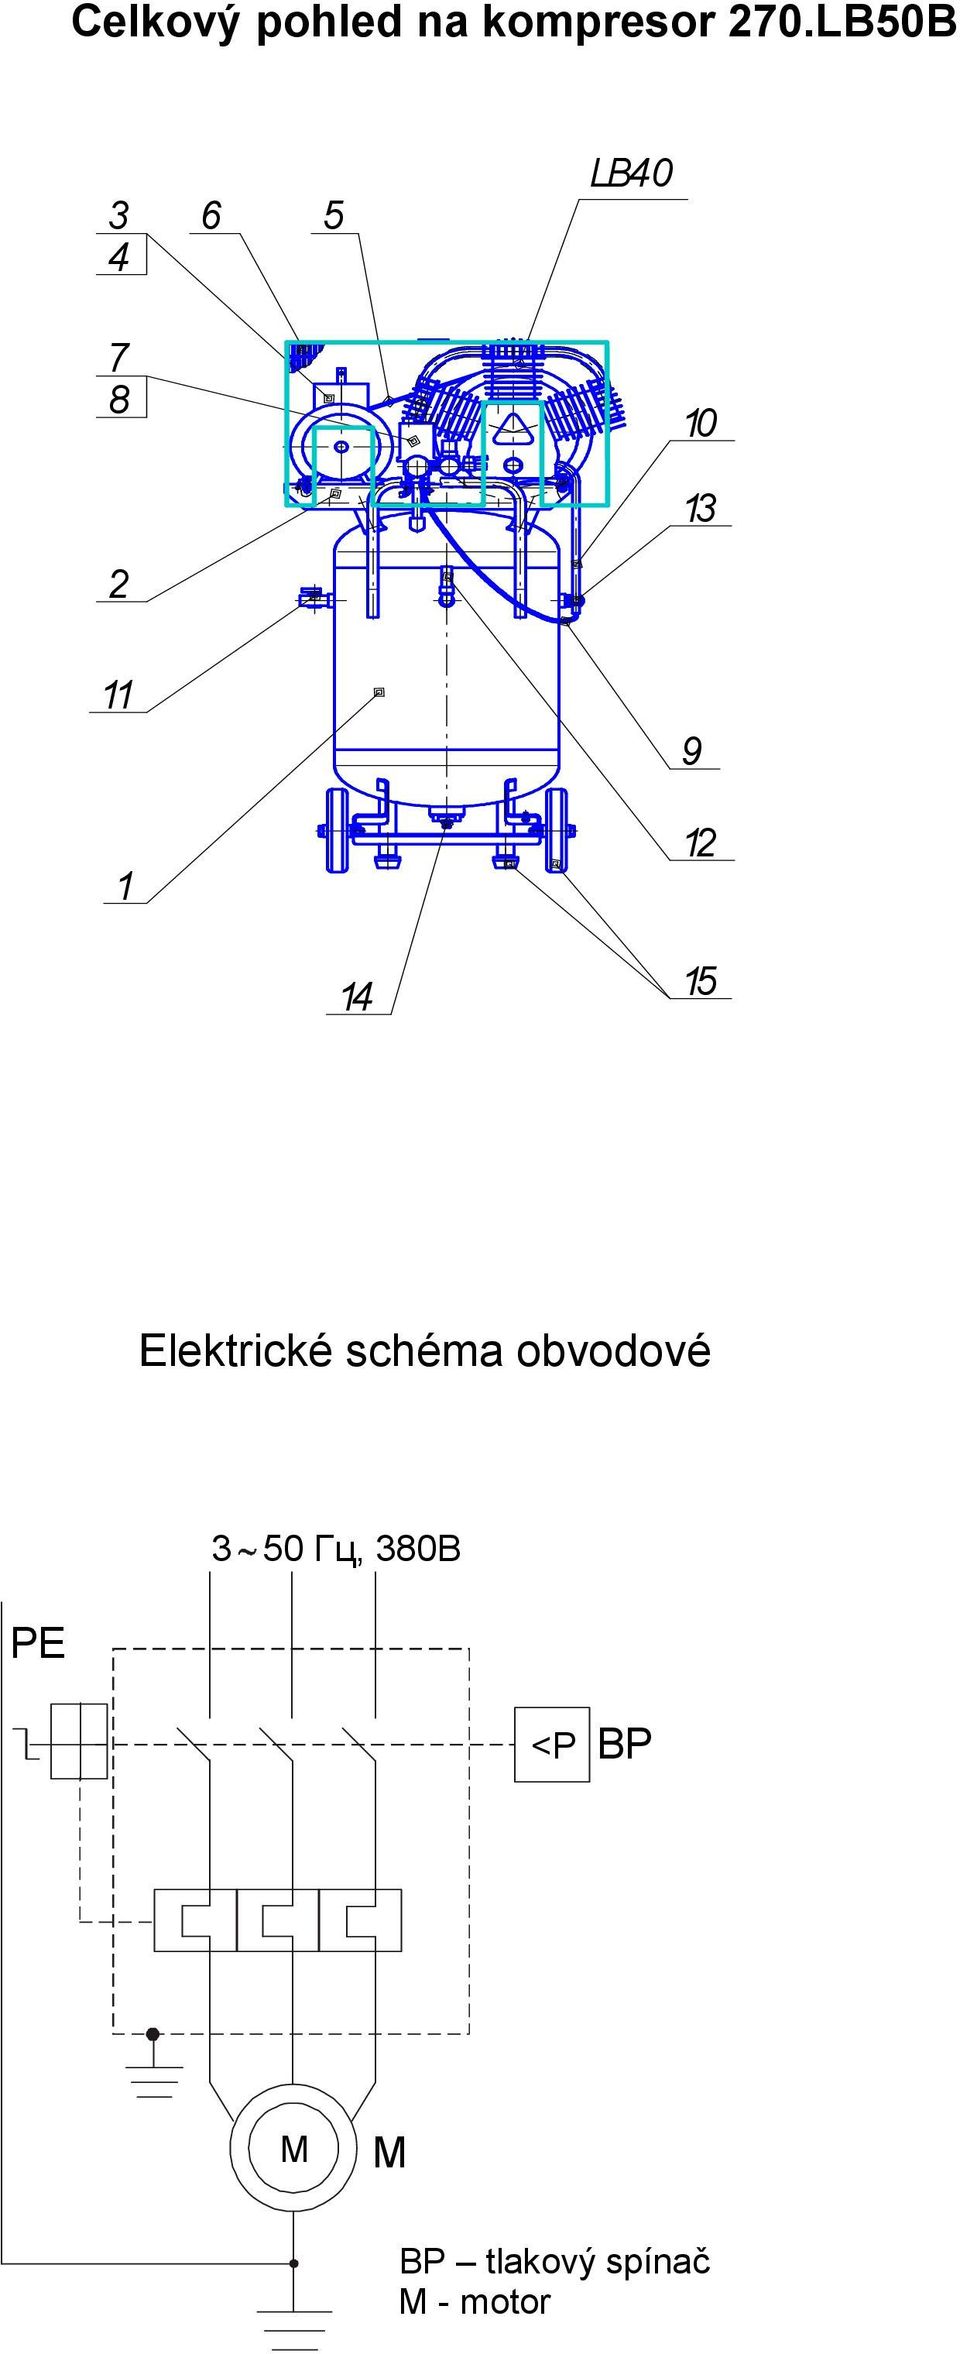 5 Elektrické schéma obvodové 3 50 Гц, 380В РЕ <P ВР М